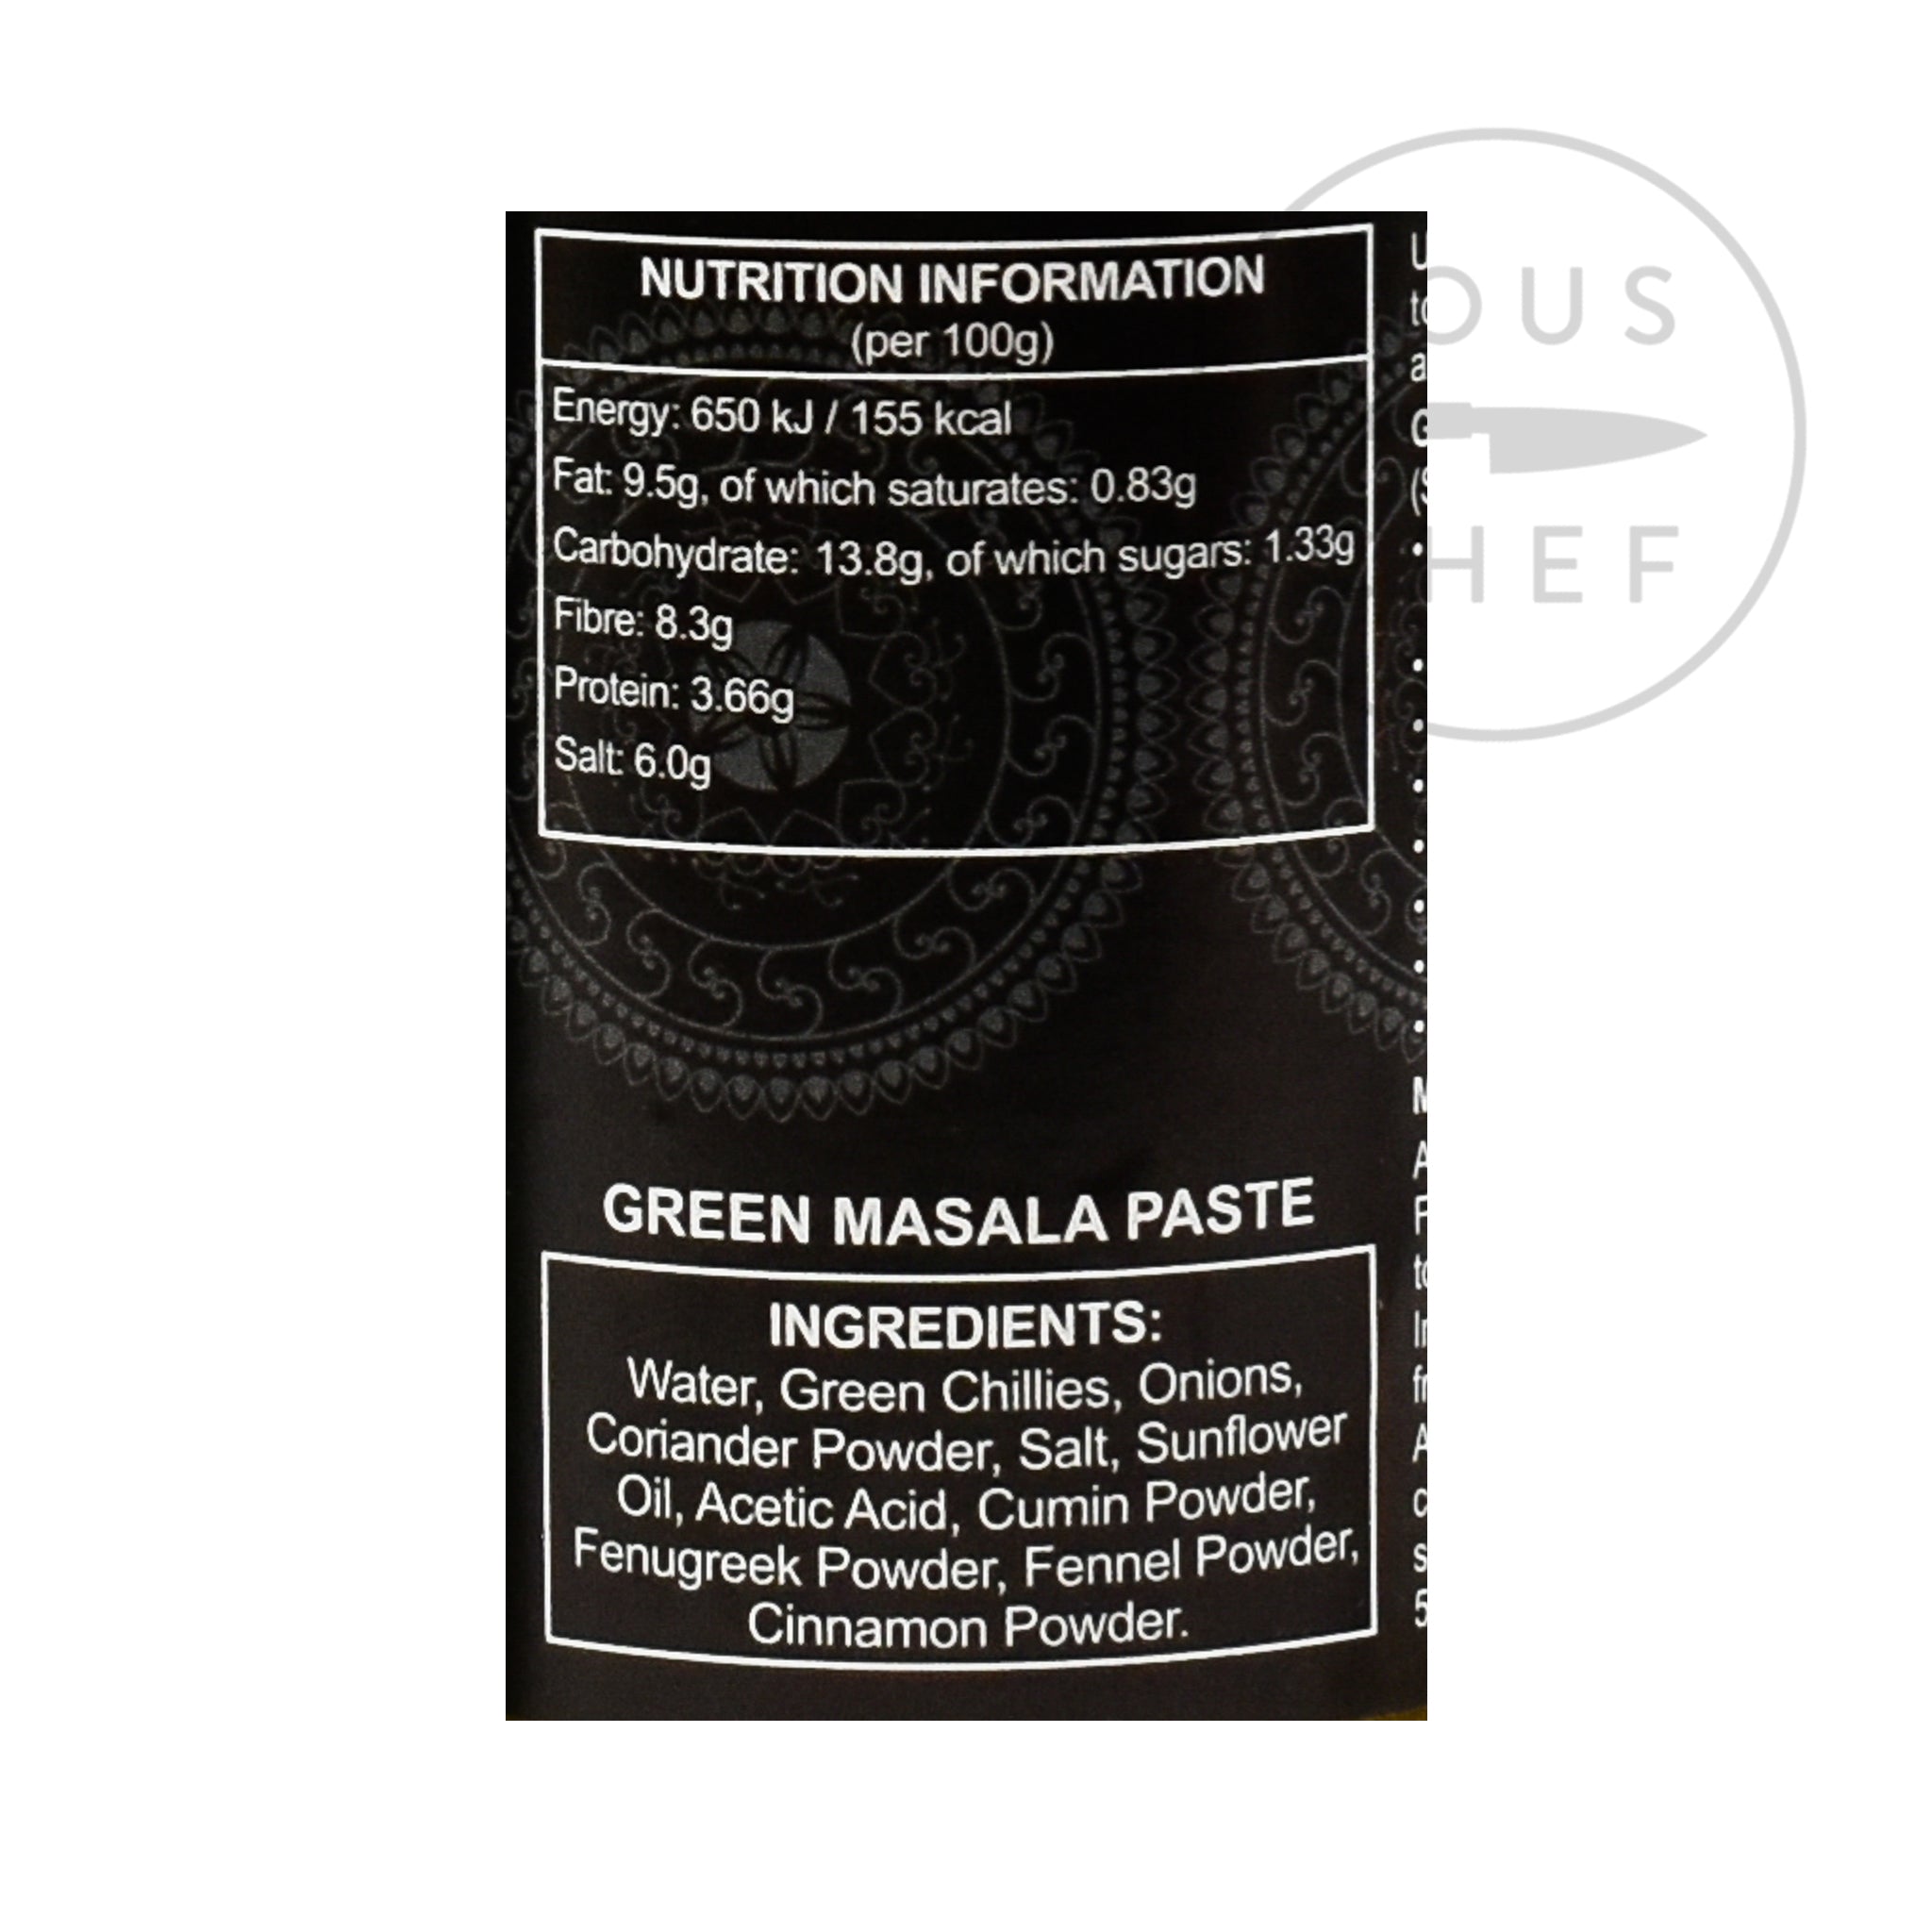 Ferns' Green Masala Paste 380g nutritional information ingredients